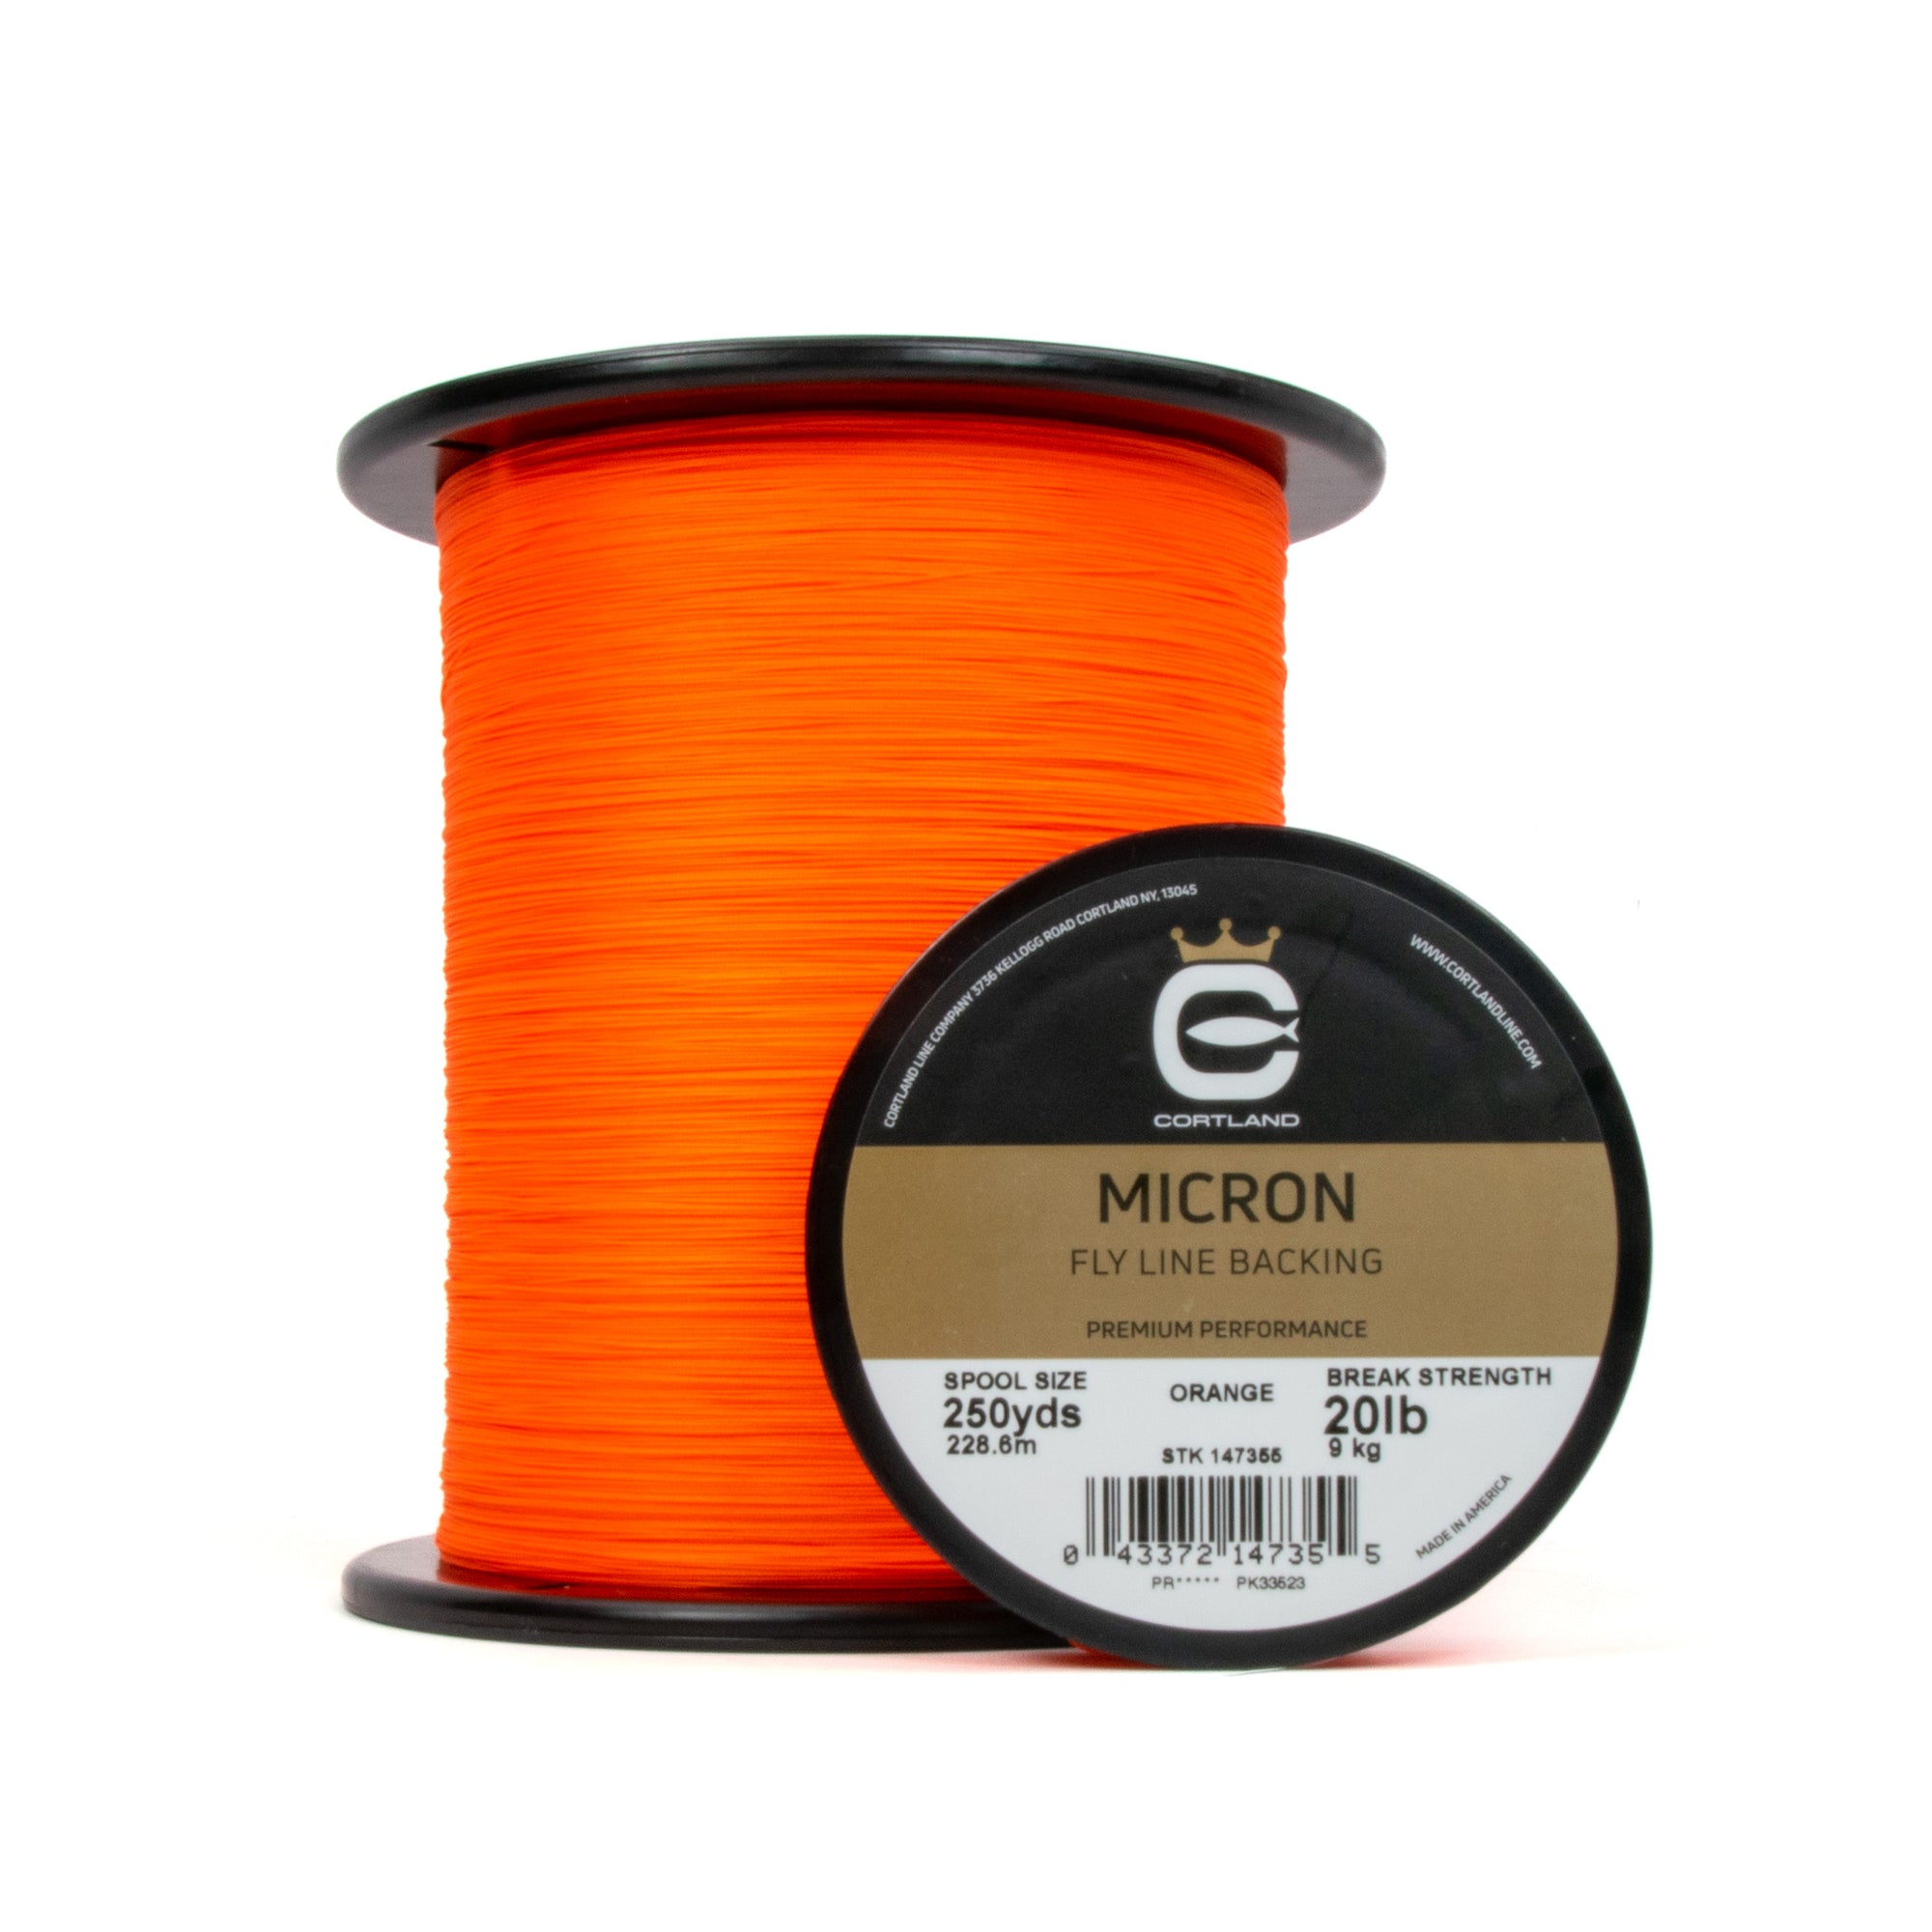 Micron Fly Line Backing - Orange